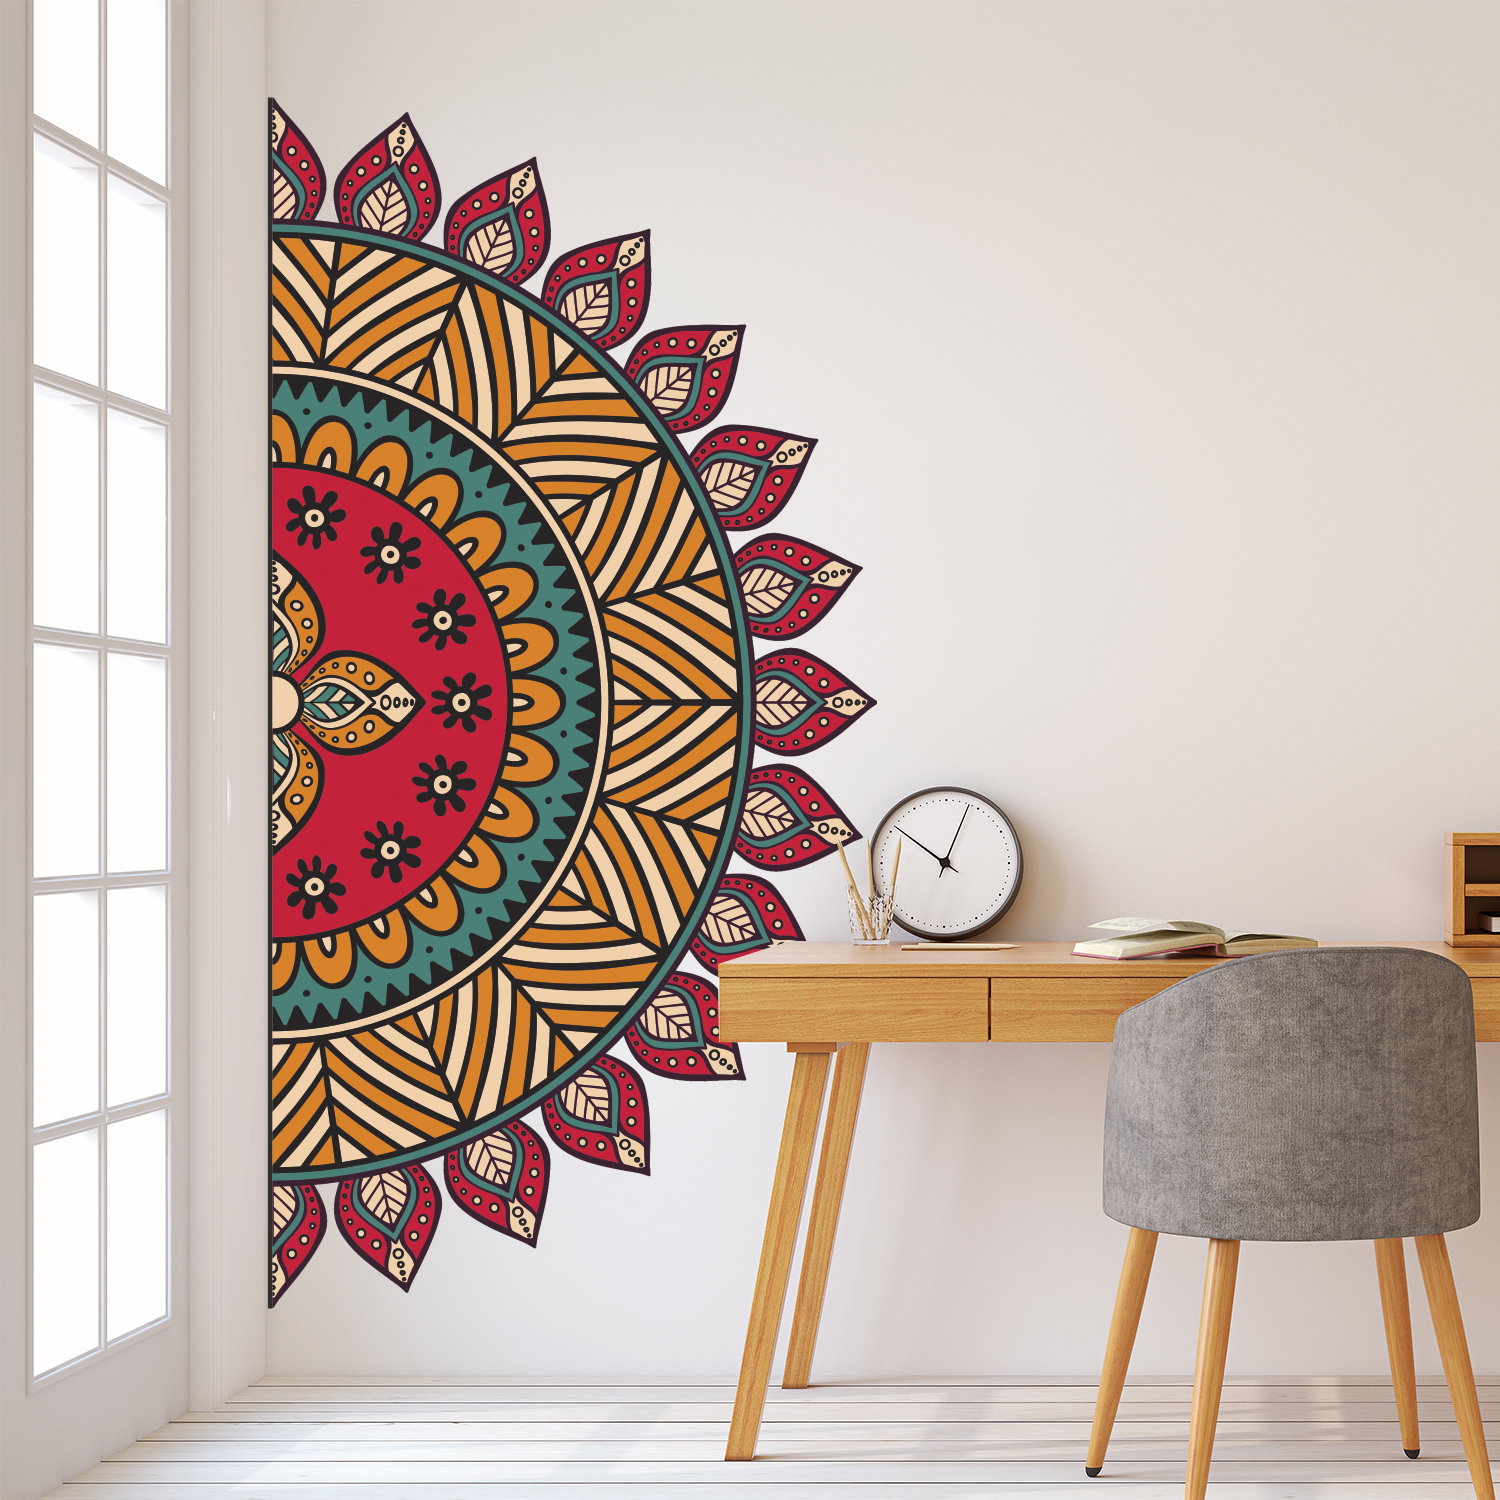 33X16" PVC Half Mandala Wall Art Sticker Decal Home Room Mural Decor Fashion